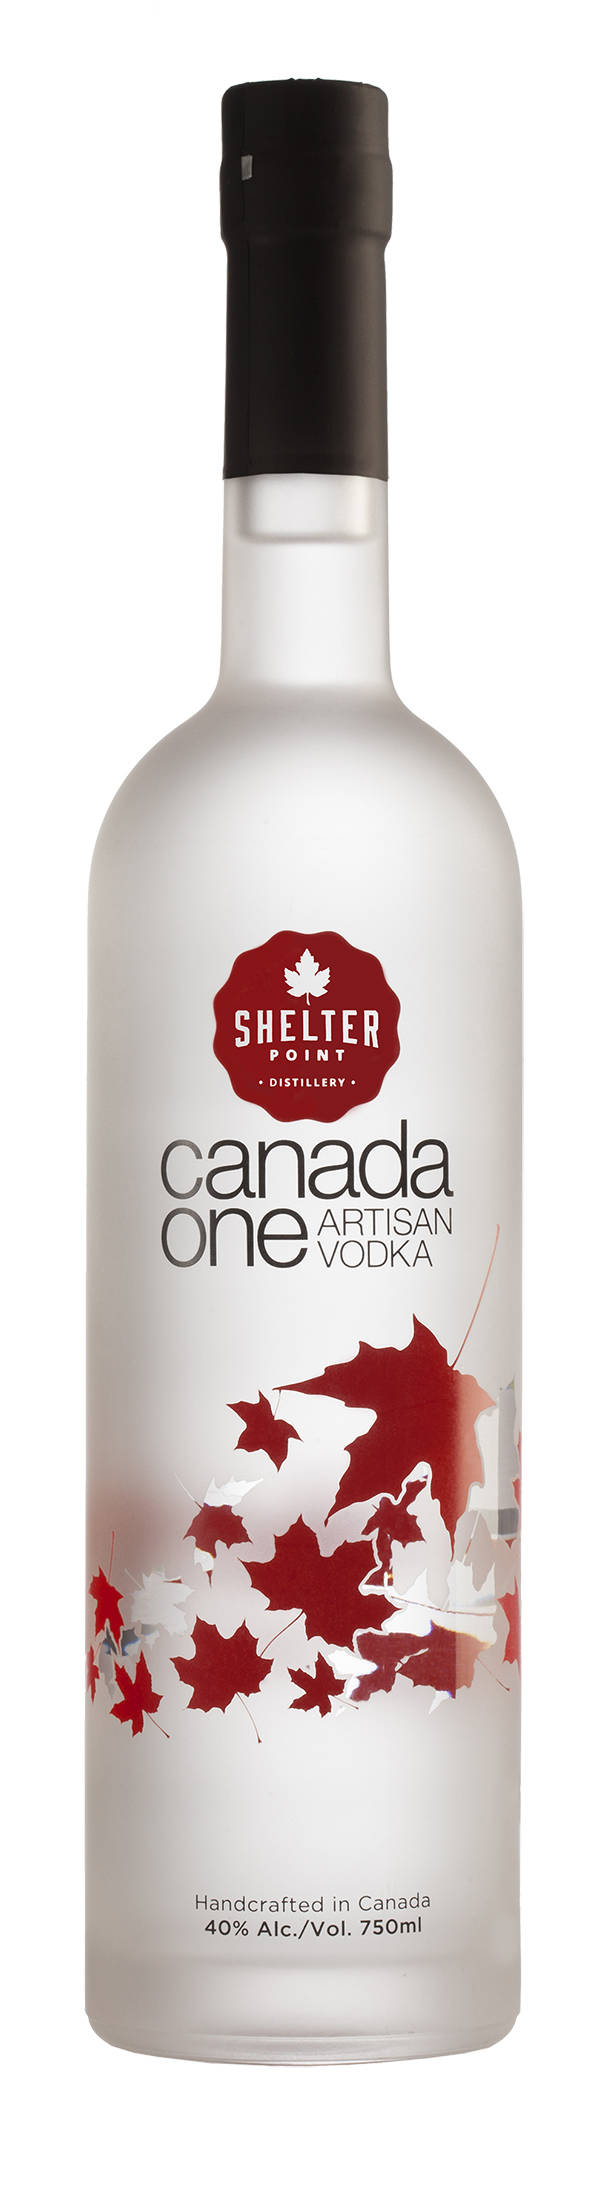 18067529_web1_Shelter-Point-Canada-One-750ml-Bottle-Shot-2018-copy